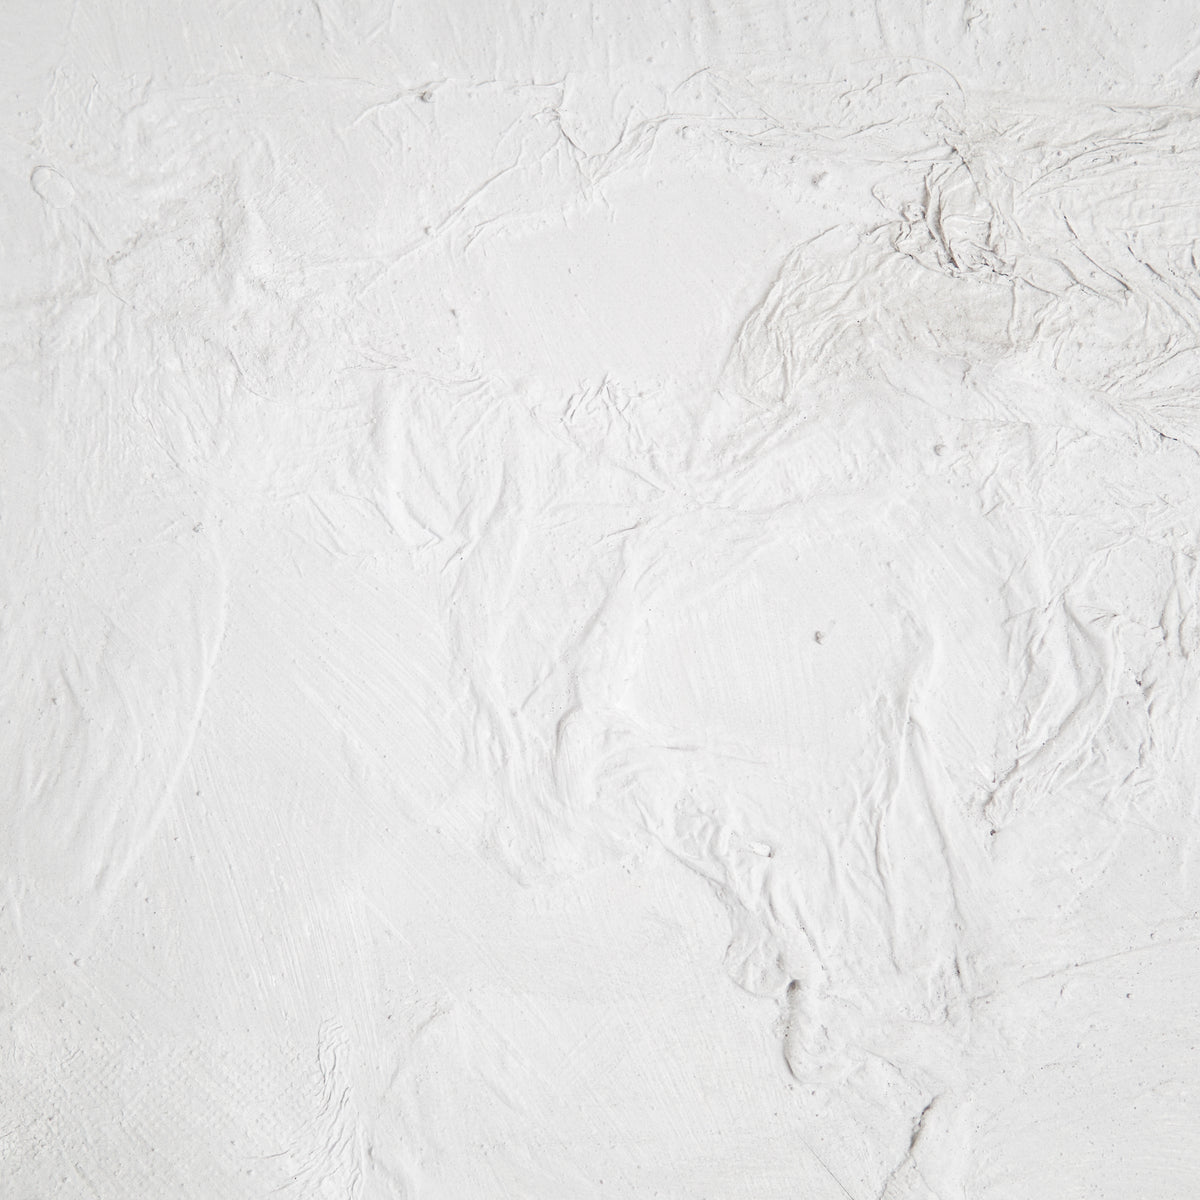 Ana Moraes | sem título VI, 2021 | 110x70 cm | Tinta spray, cimento, silicone e papel sobre tela